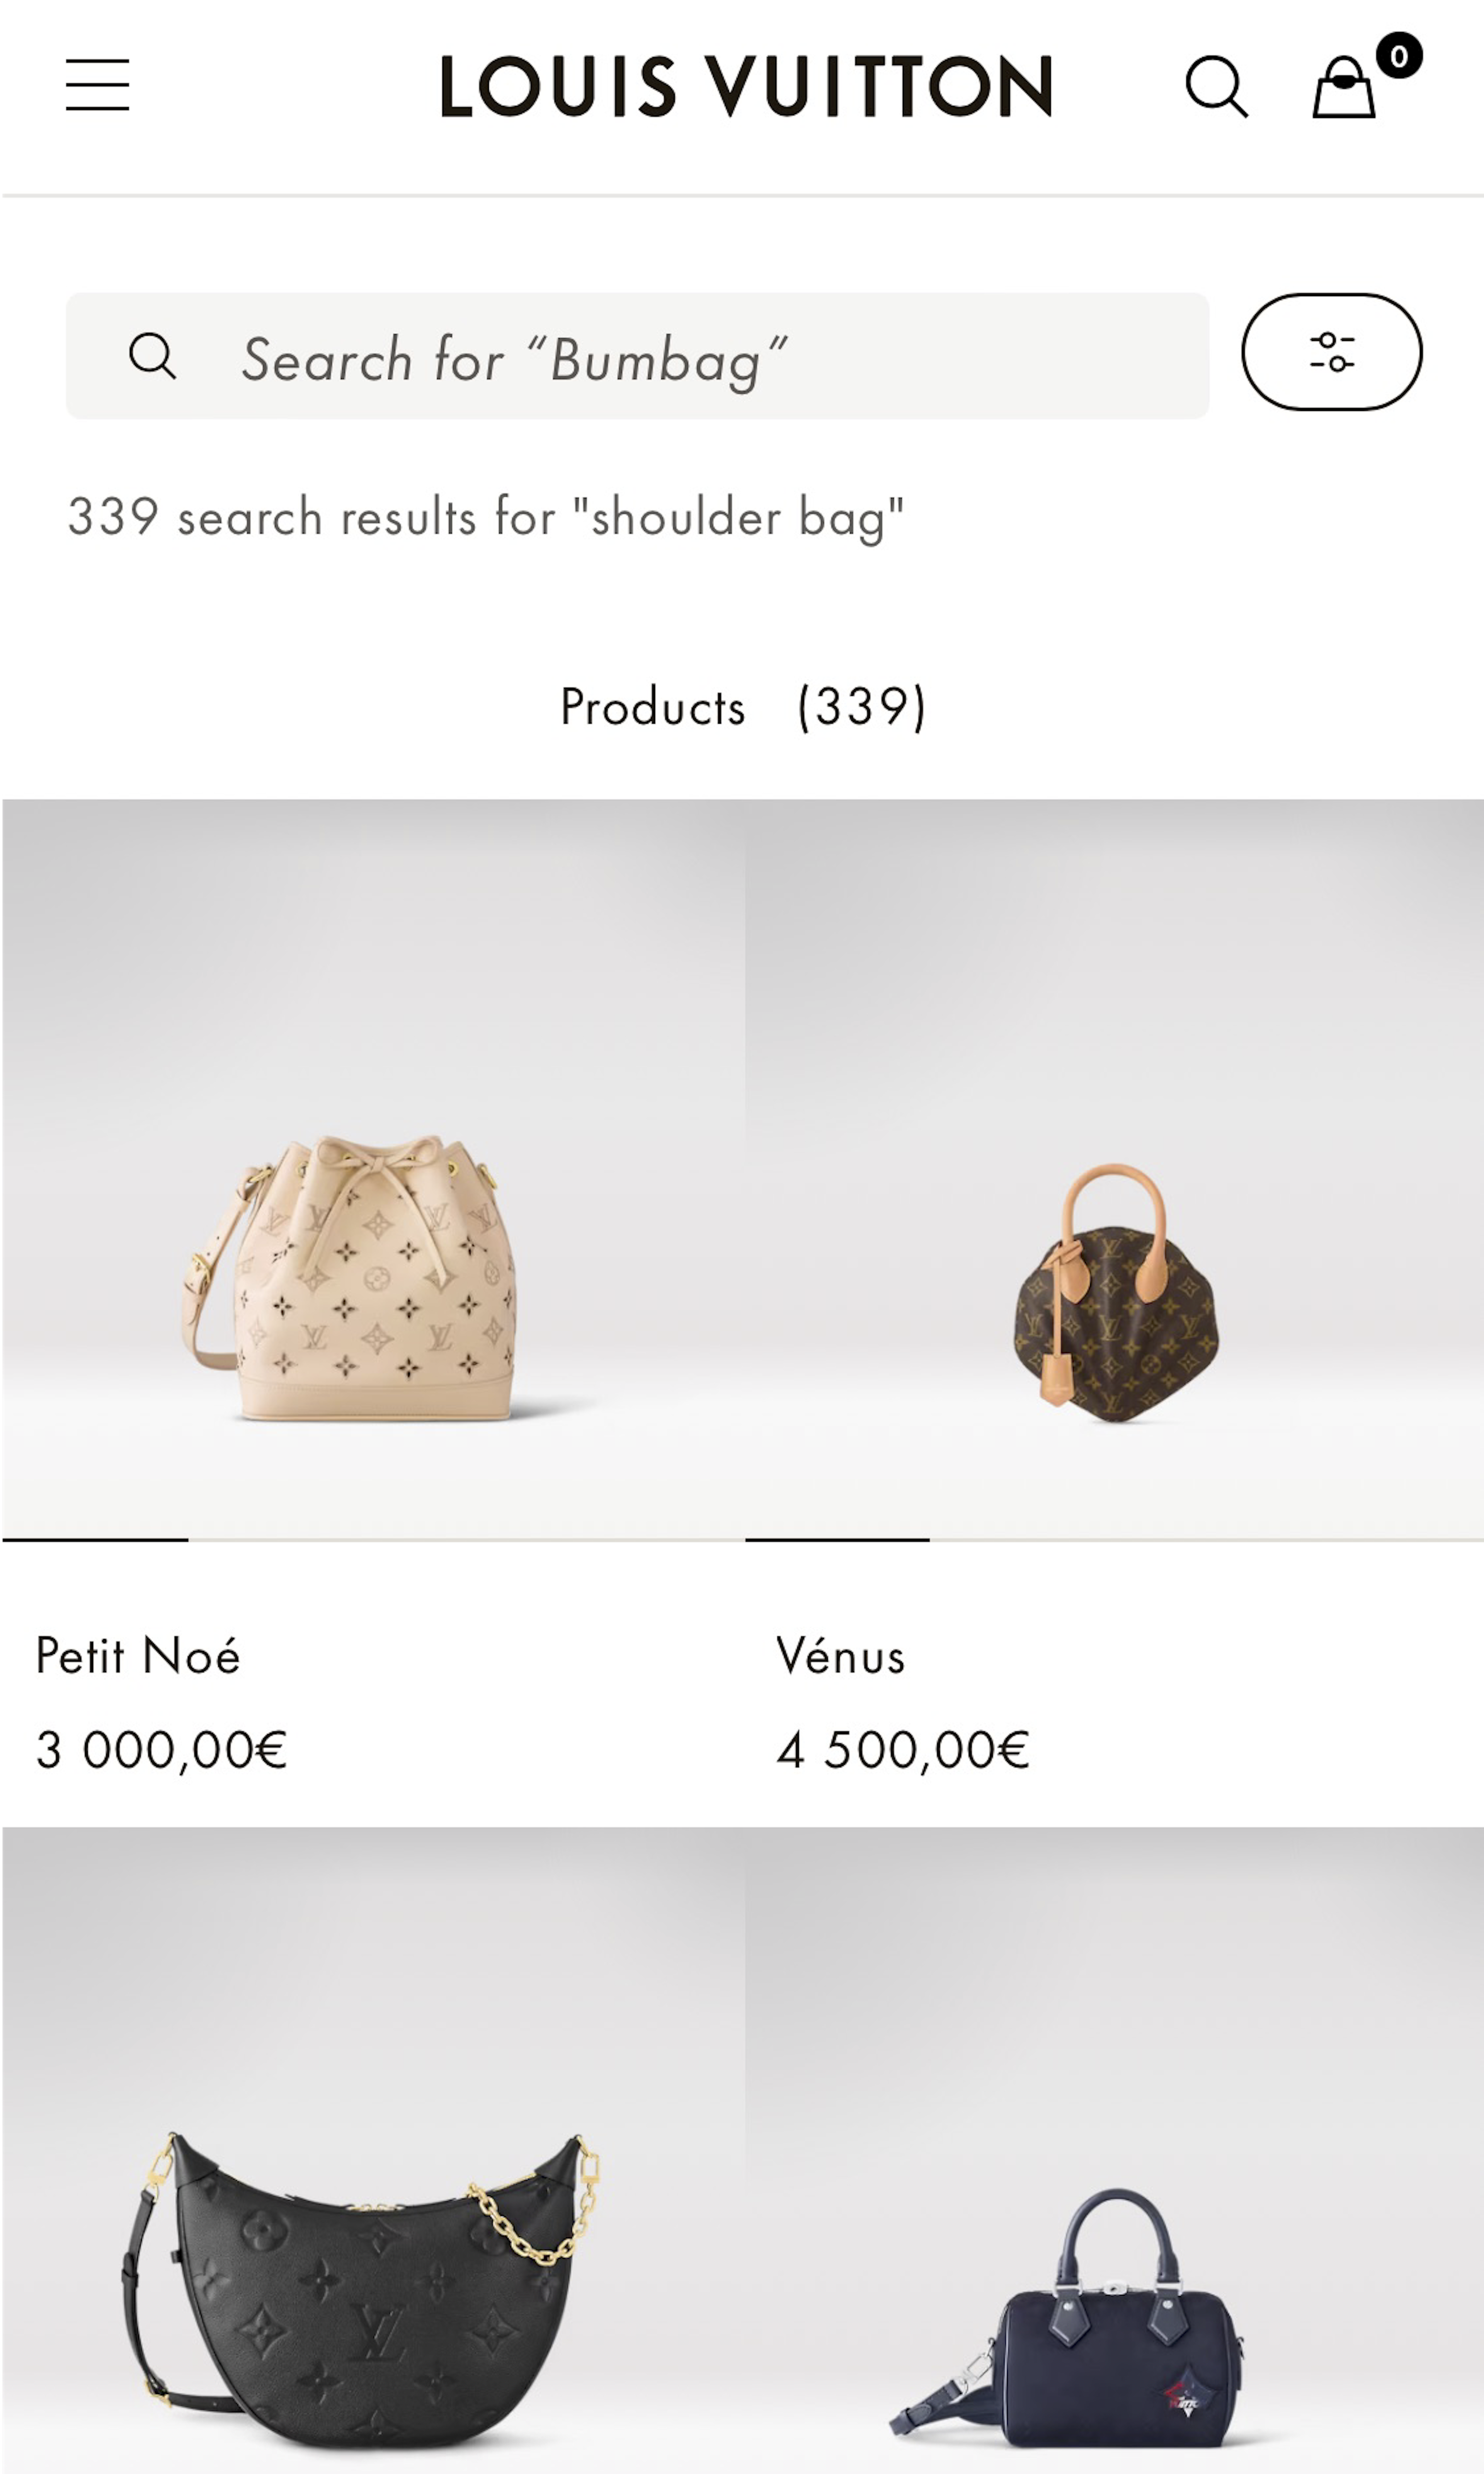 Mobile screenshot of Louis Vuitton